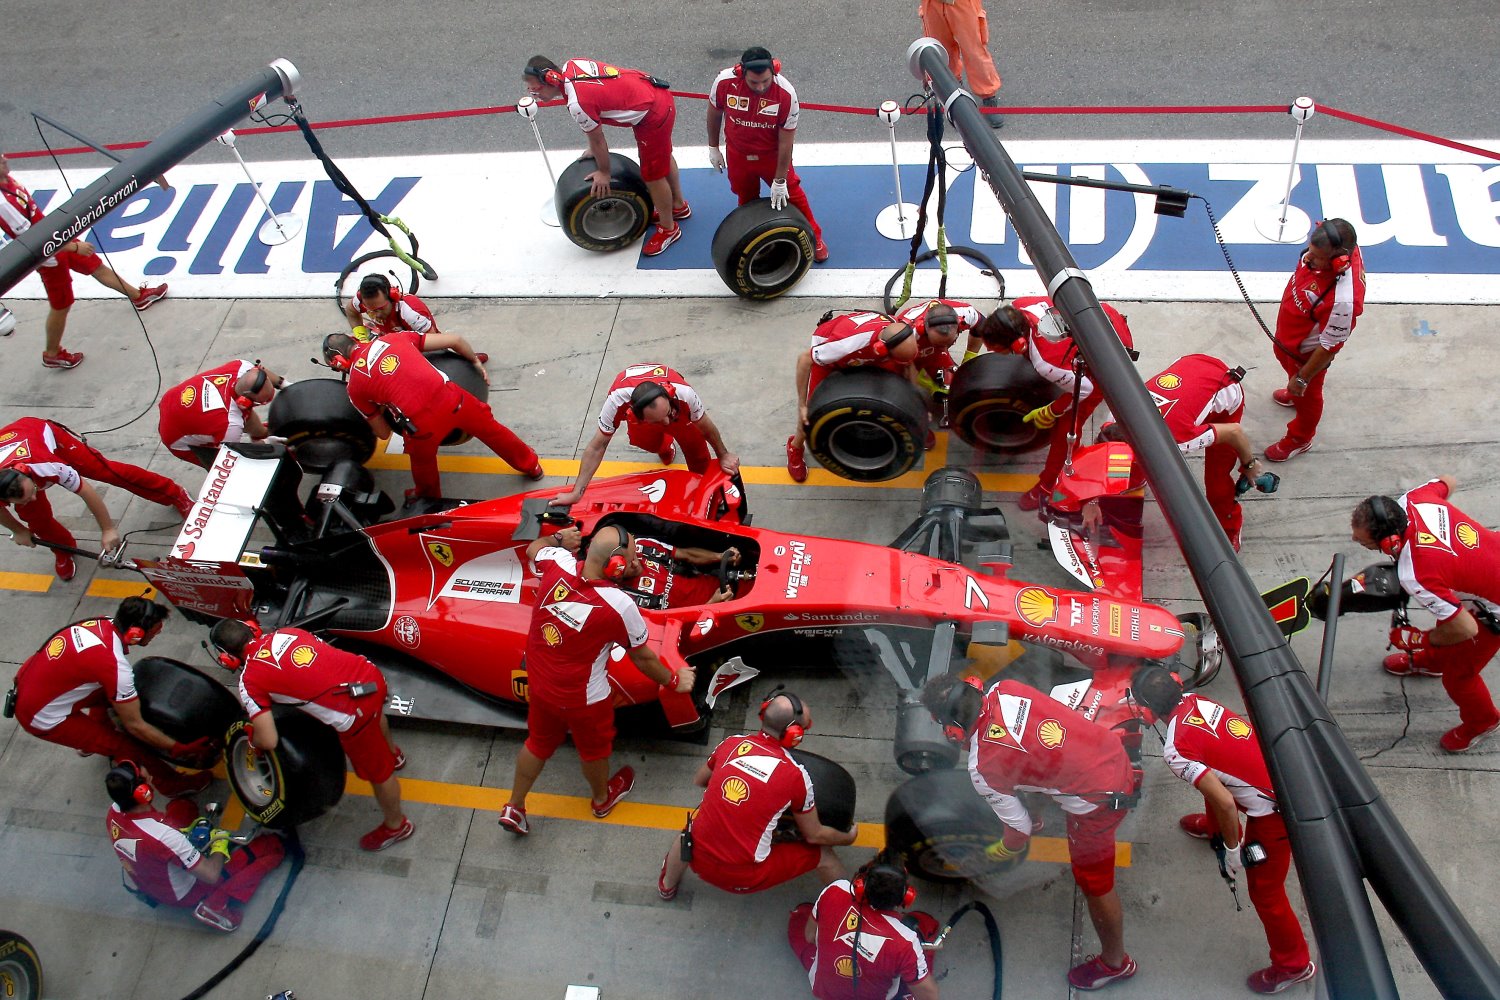 Red Bull will likely run Ferrari engines in 2016